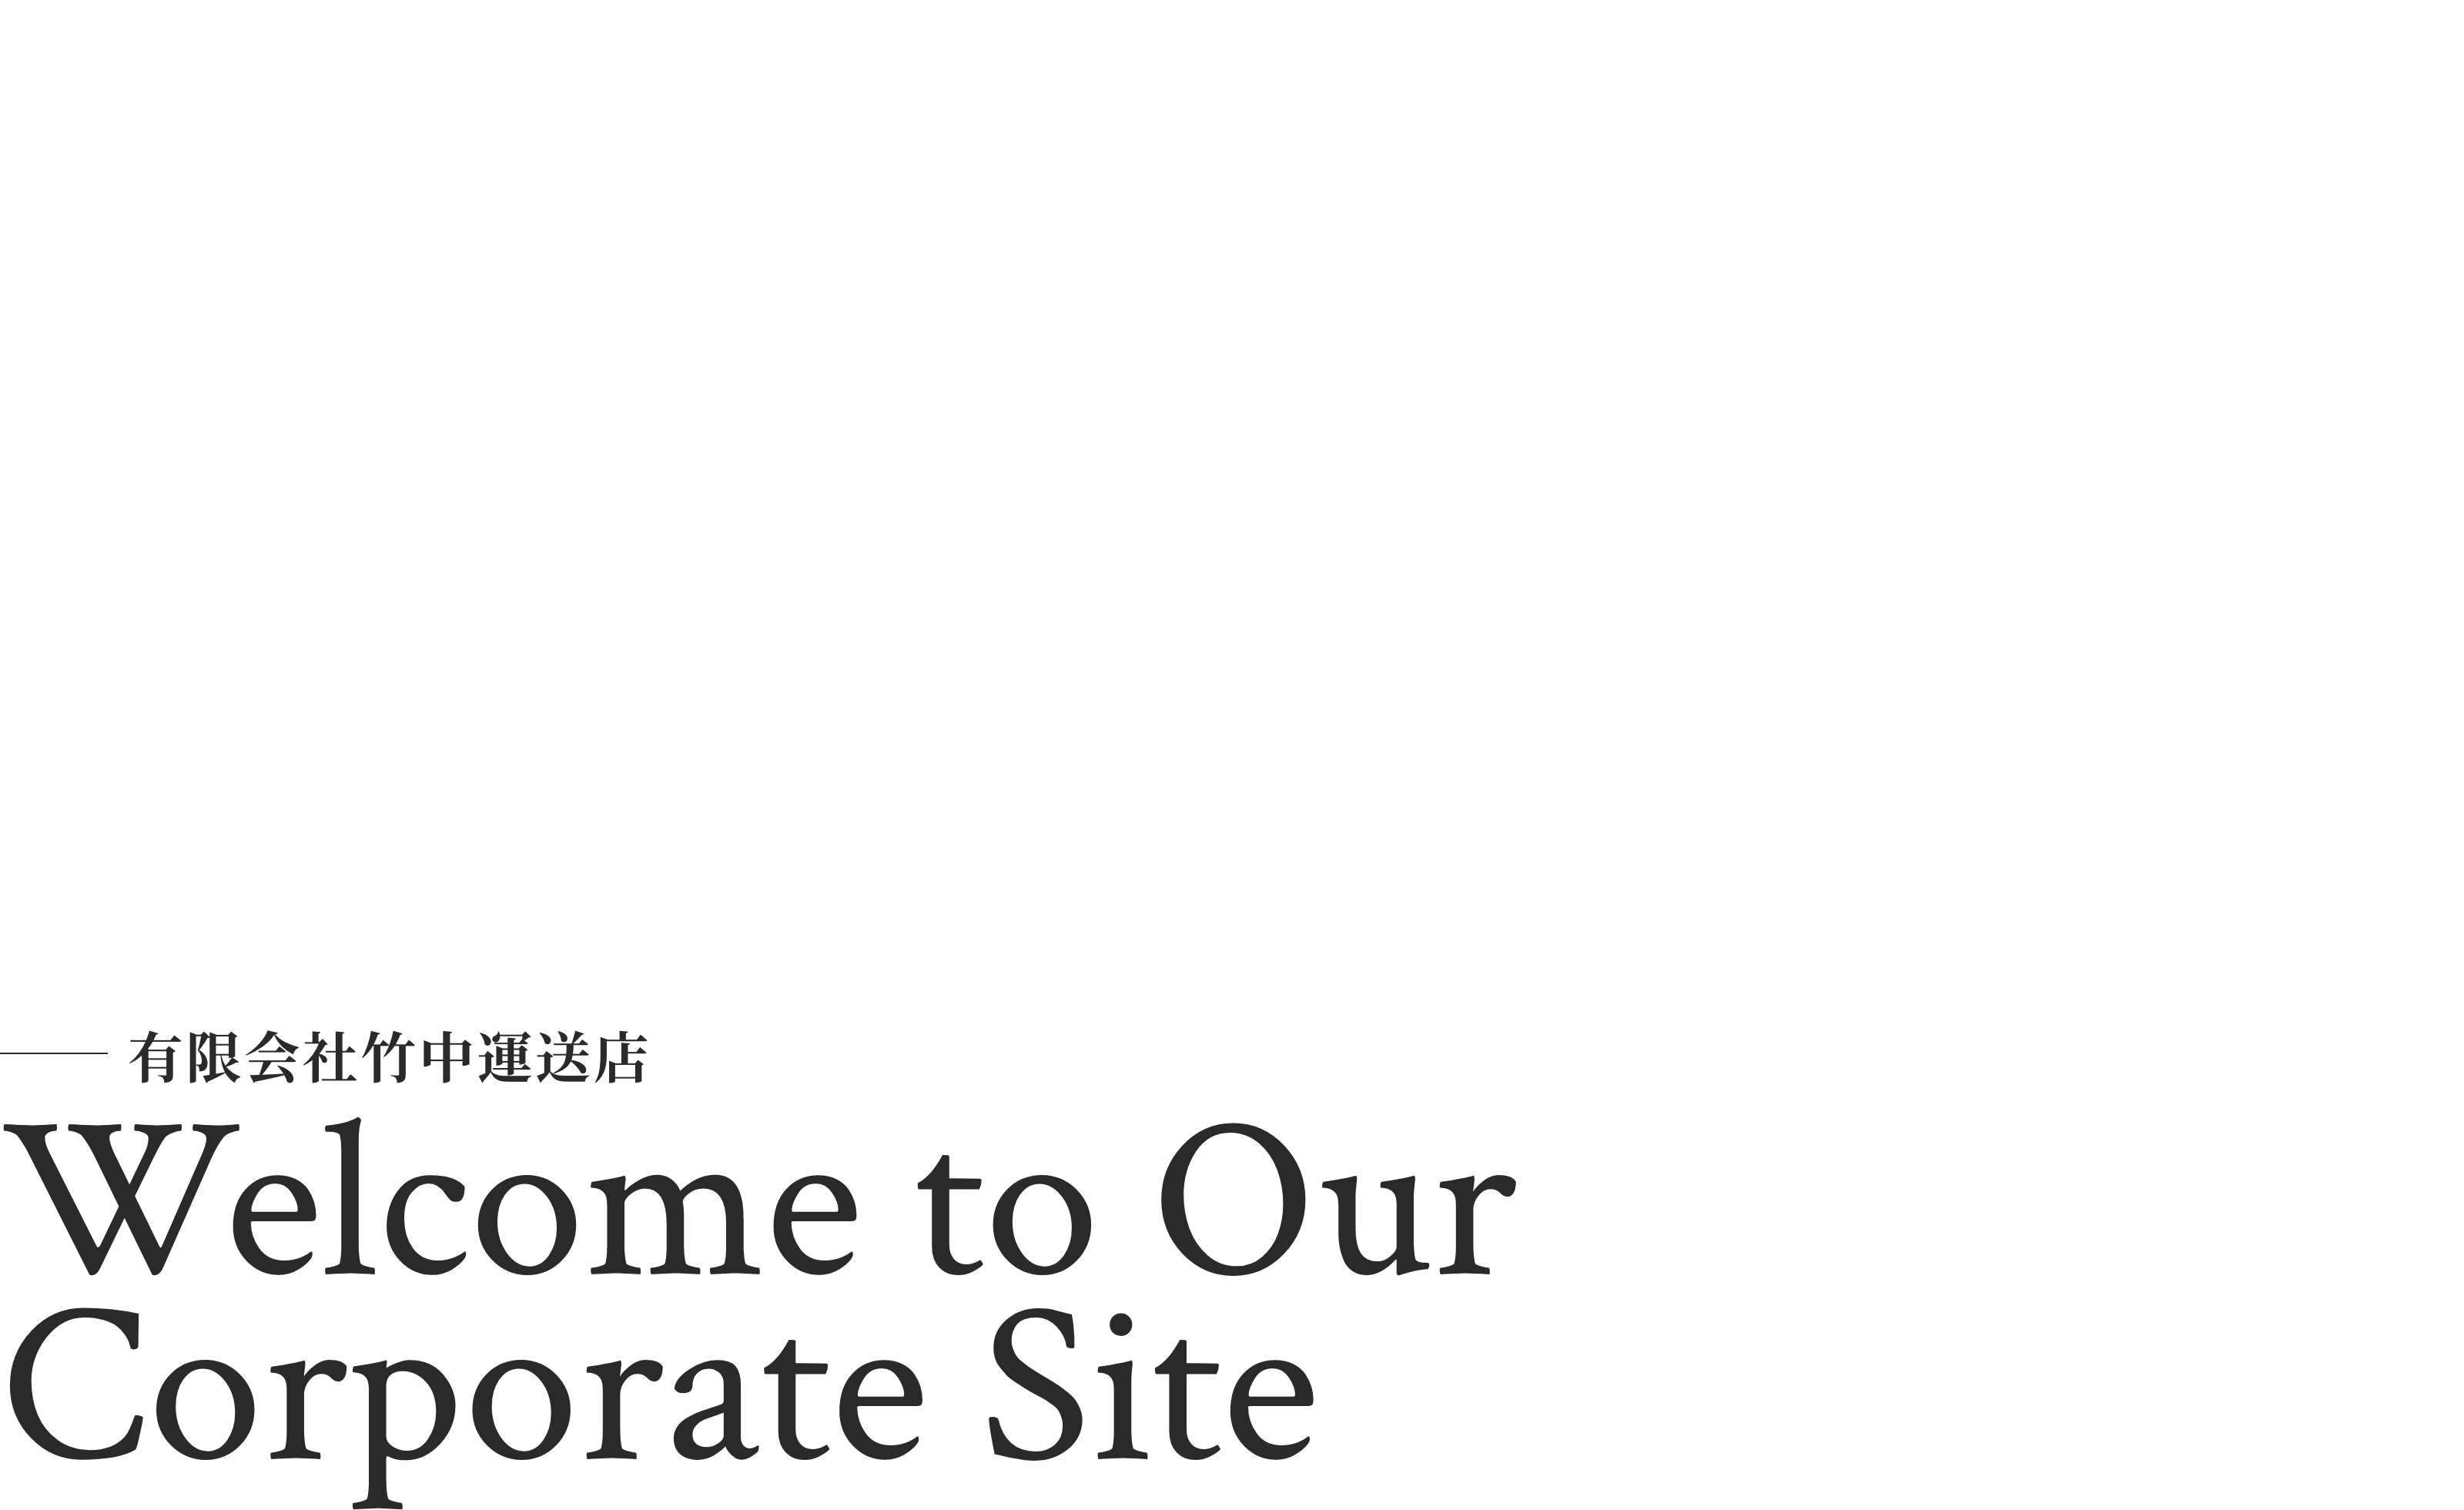 有限会社竹中運送店 Welcome to Our Corporate Site